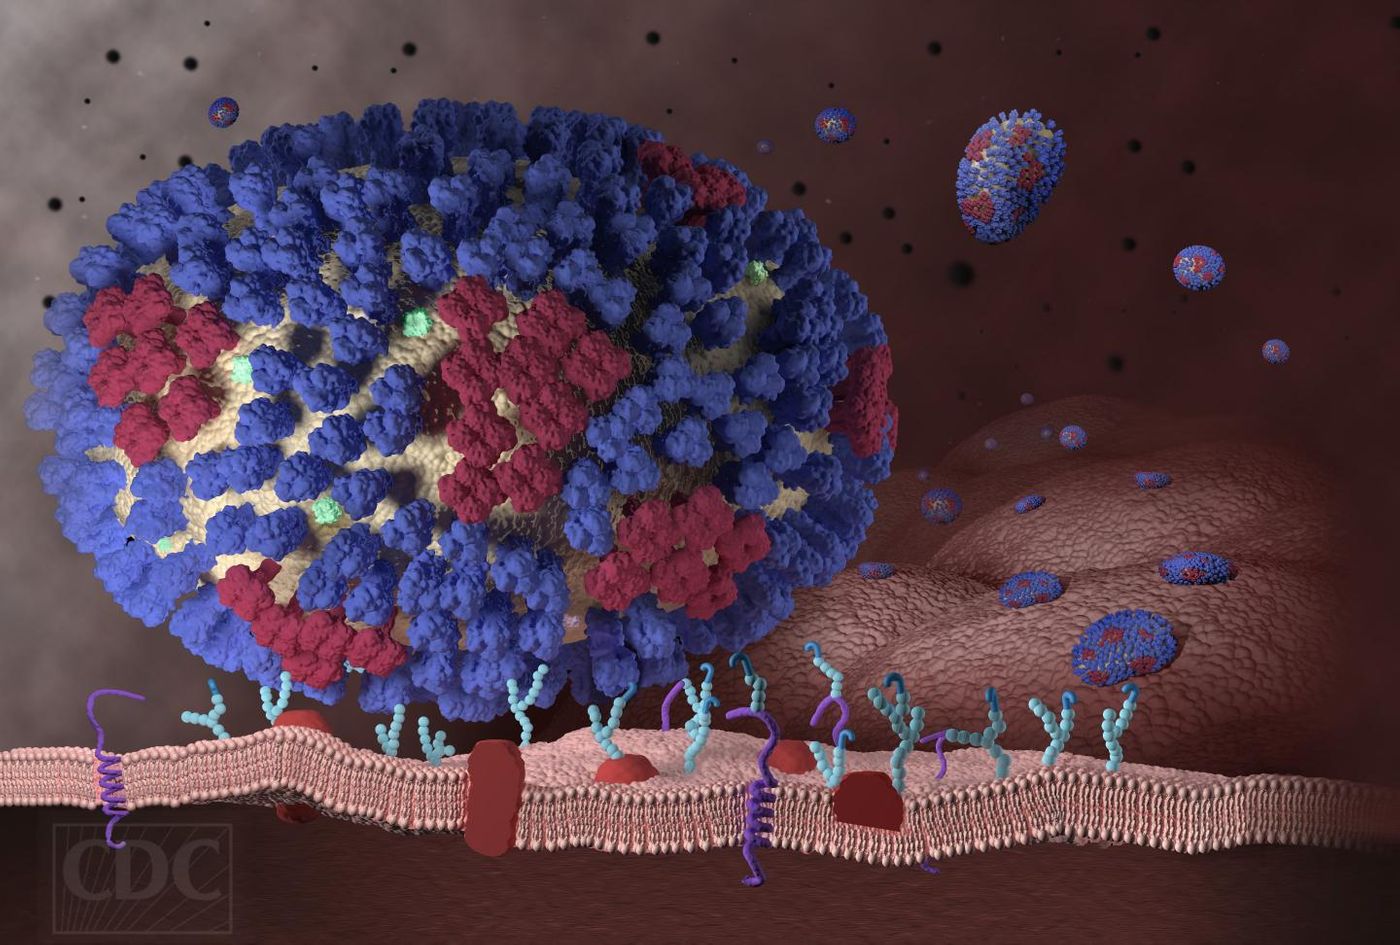 Representation of the influenza virus. Credit: CDC